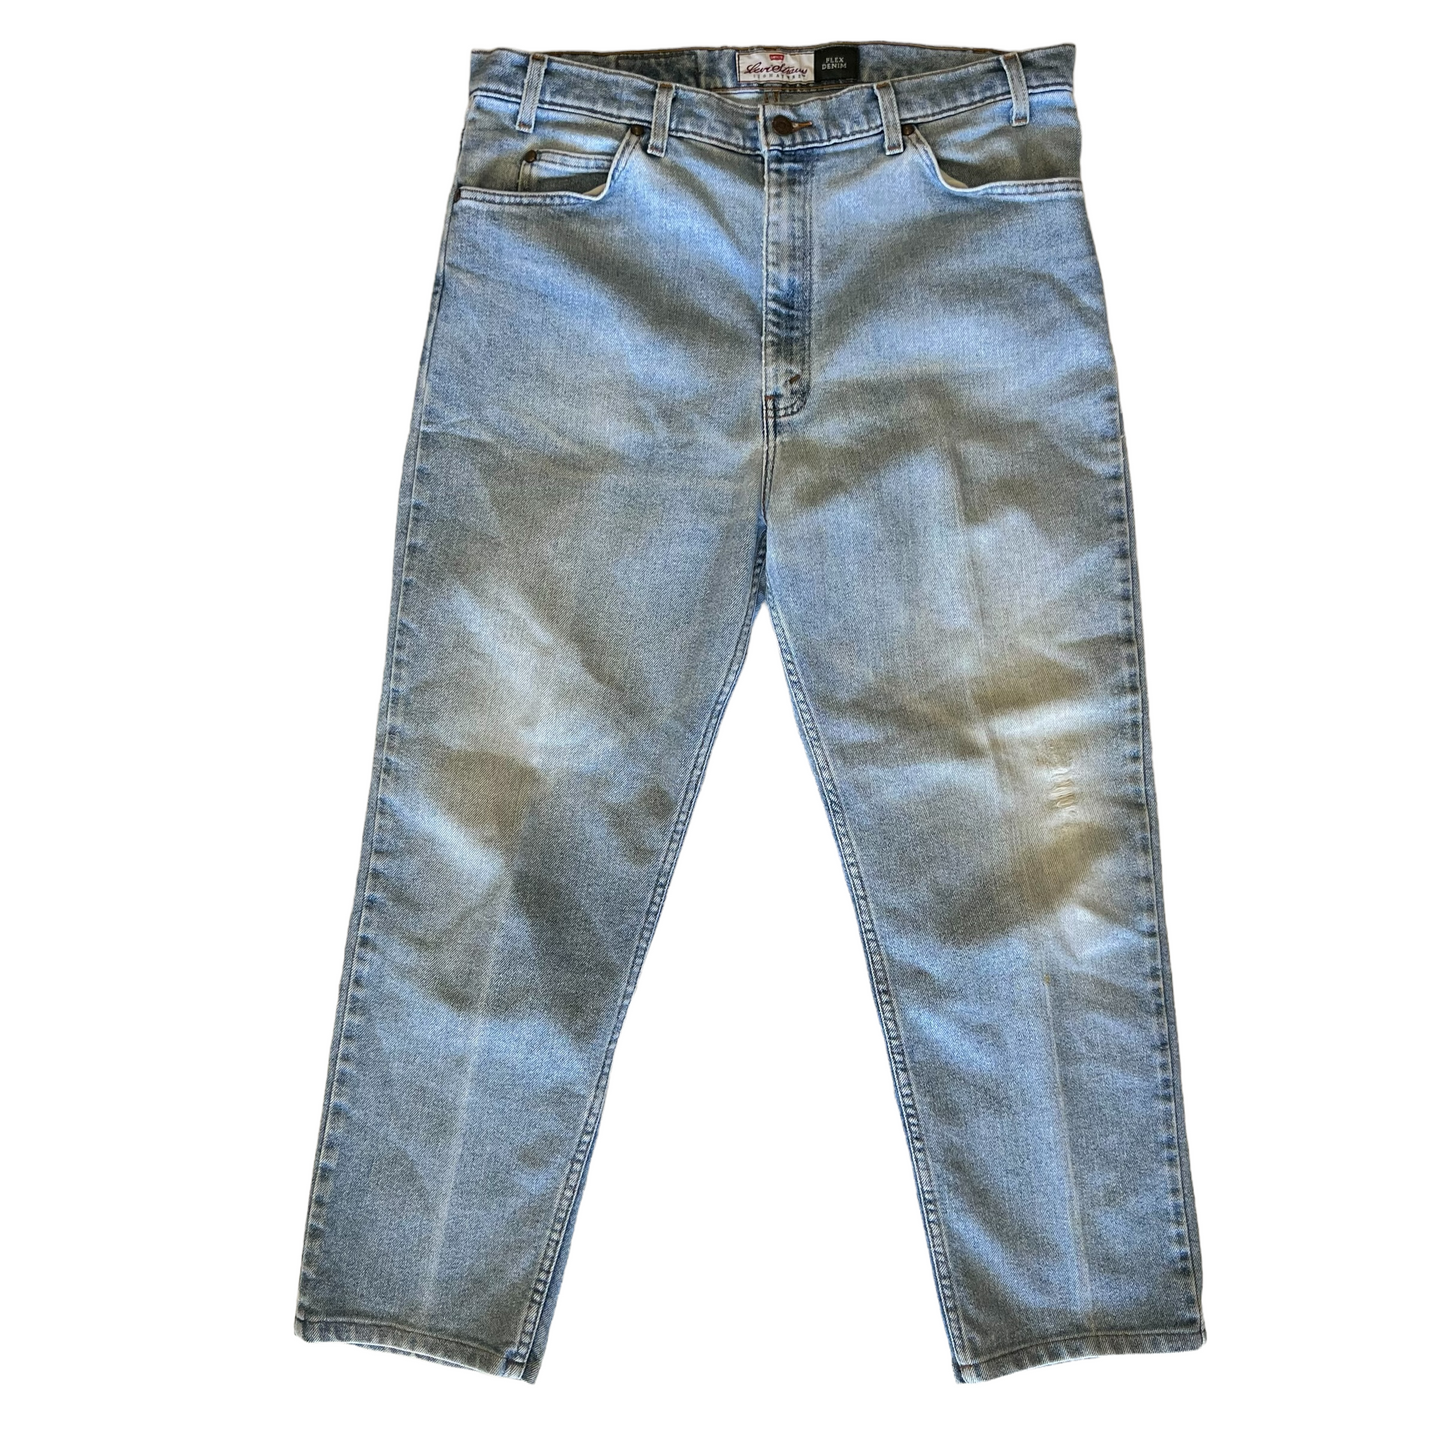 Levis 540 Light Wash Straight Leg Relaxed Fit Jeans 36 x 40 Flex Denim Jeans